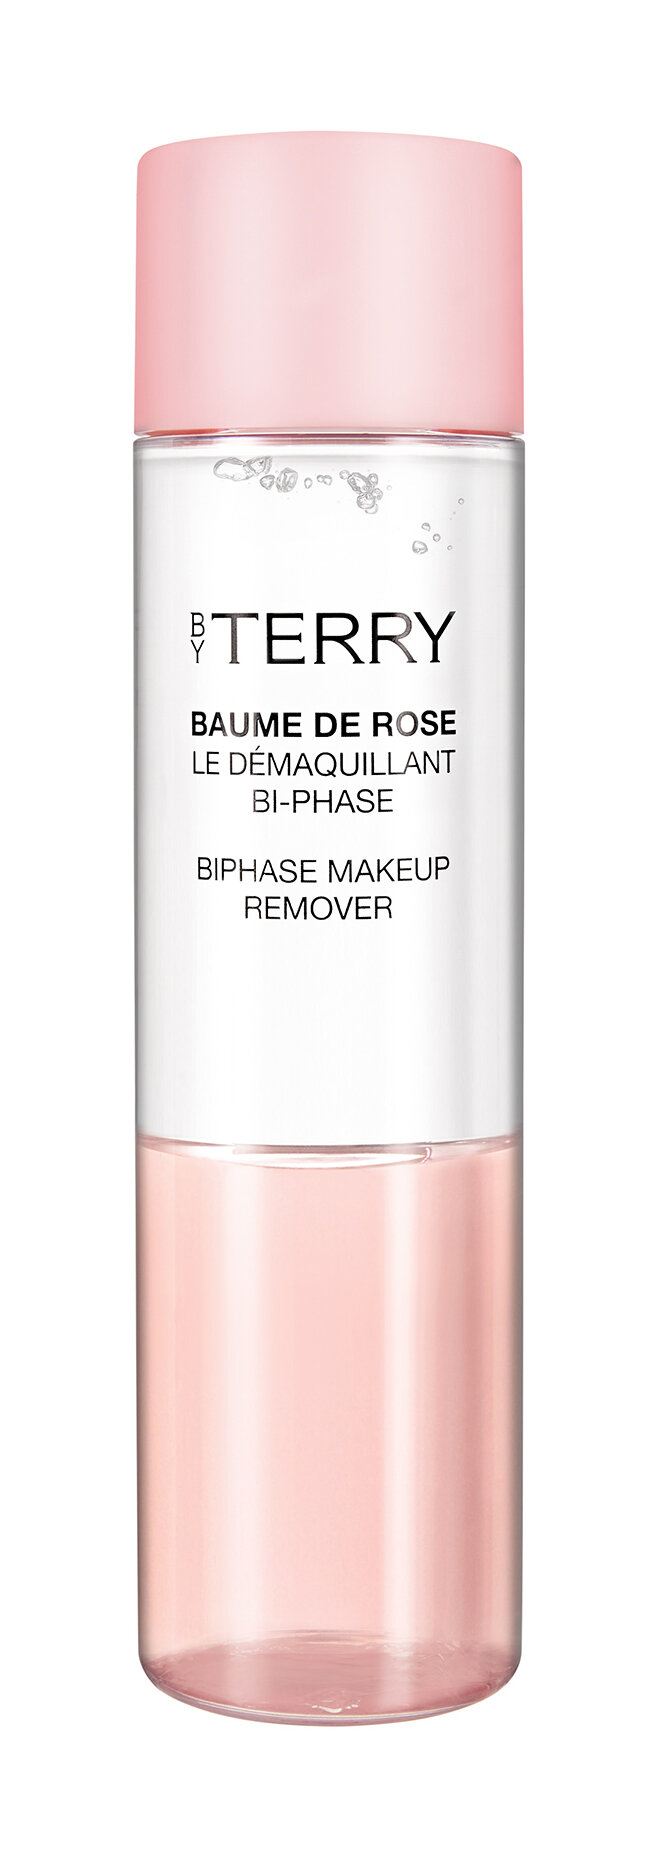 BY TERRY Baume De Rose Bi-Phase Make-Up Remover Двухфазное средство для снятия макияжа, 200 мл